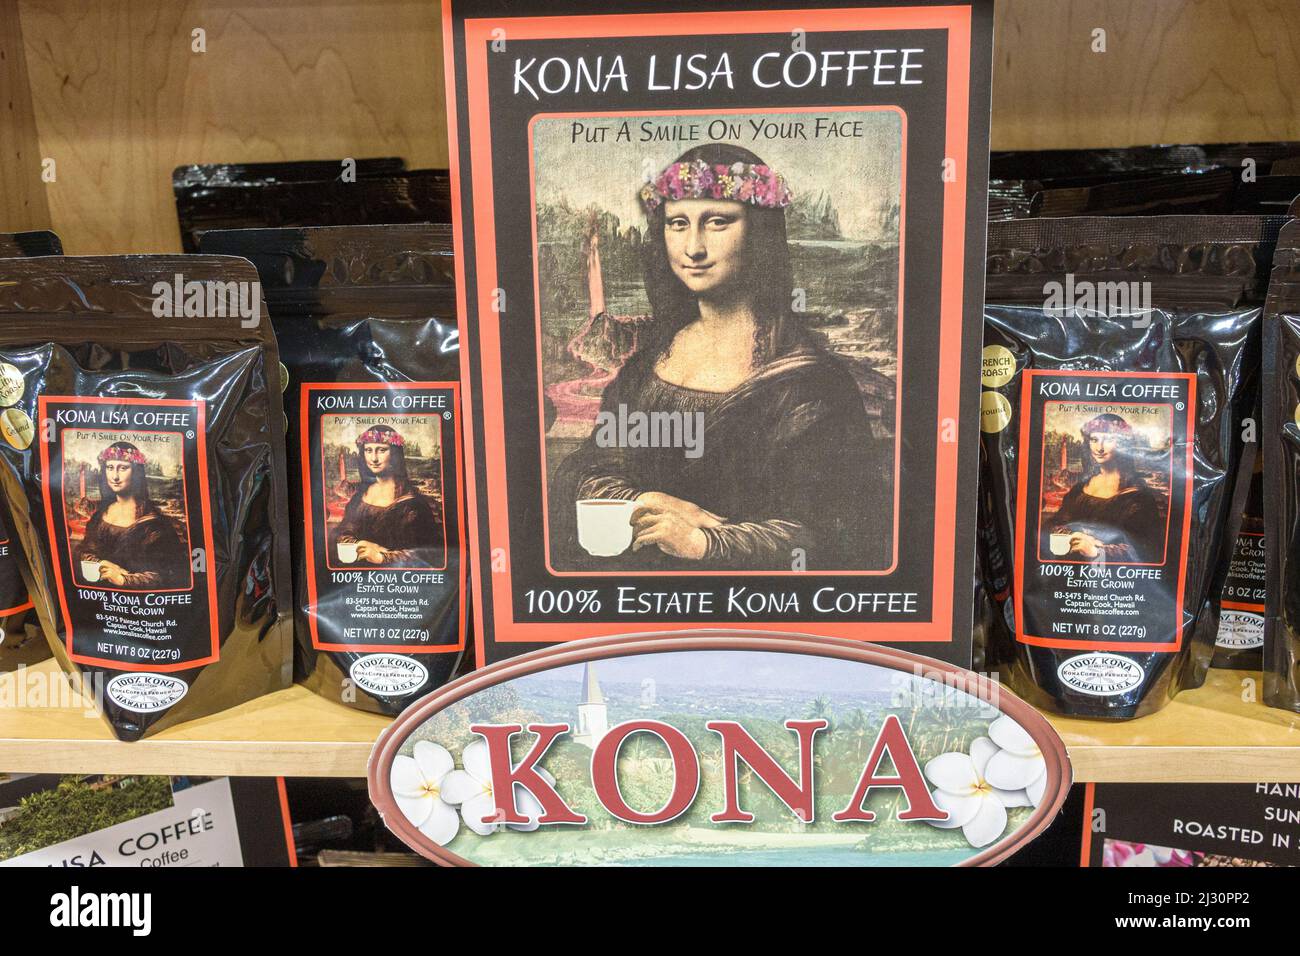 Honolulu Hawaii,Oahu,Hawaiian,Hilo Hattie,market selling store display sale Kona Lisa Coffee Stock Photo